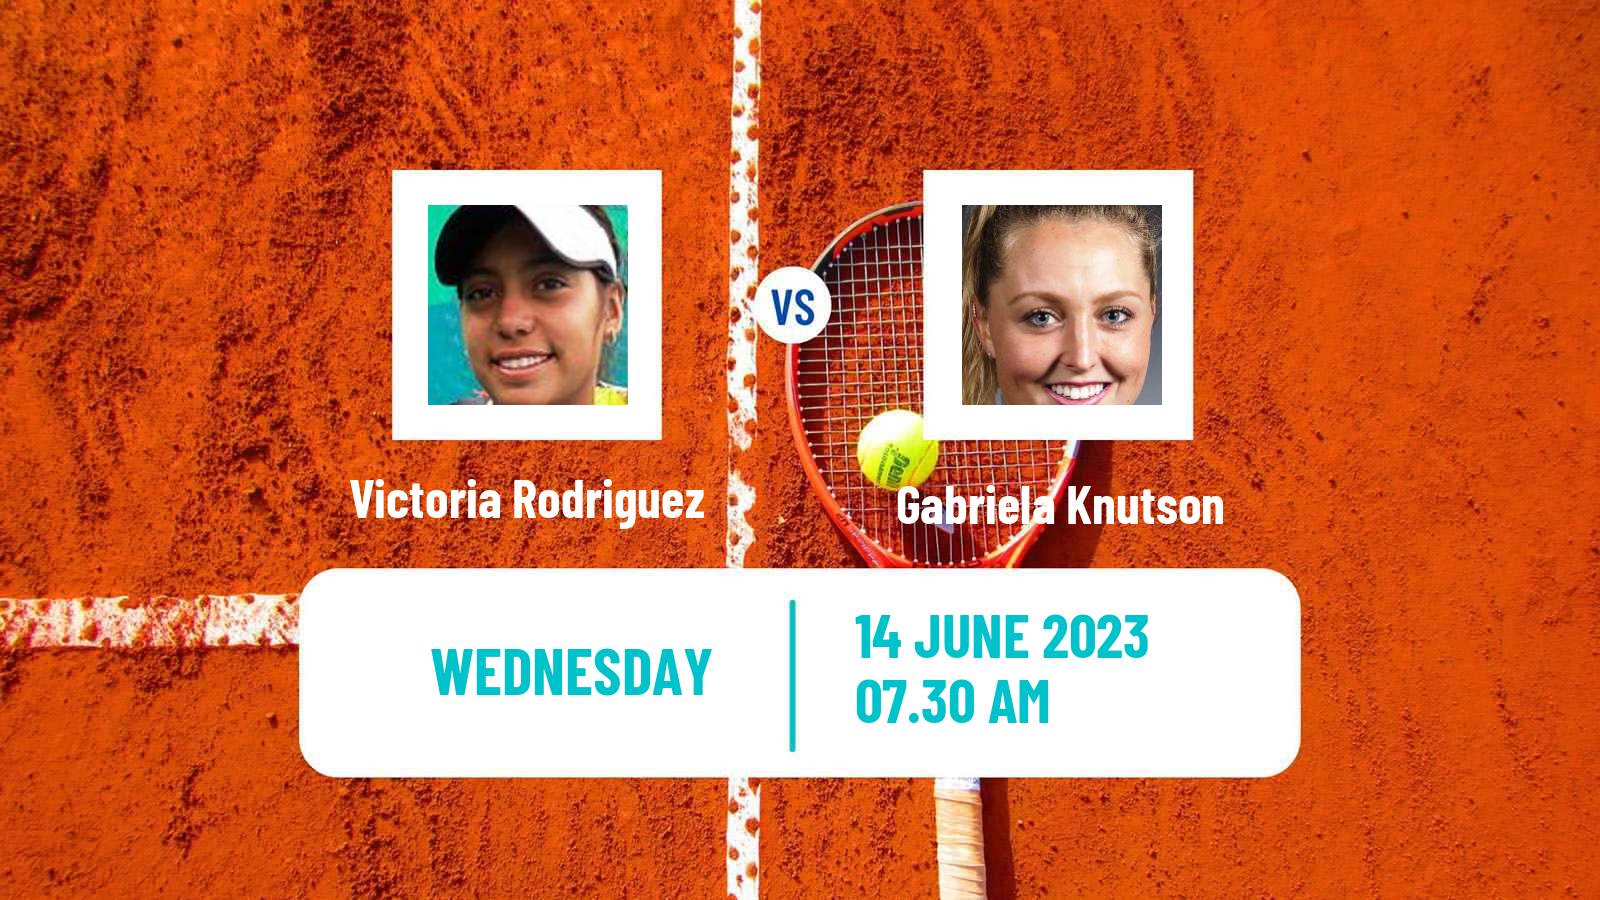 Tennis ITF W25 Guimaraes Women Victoria Rodriguez - Gabriela Knutson